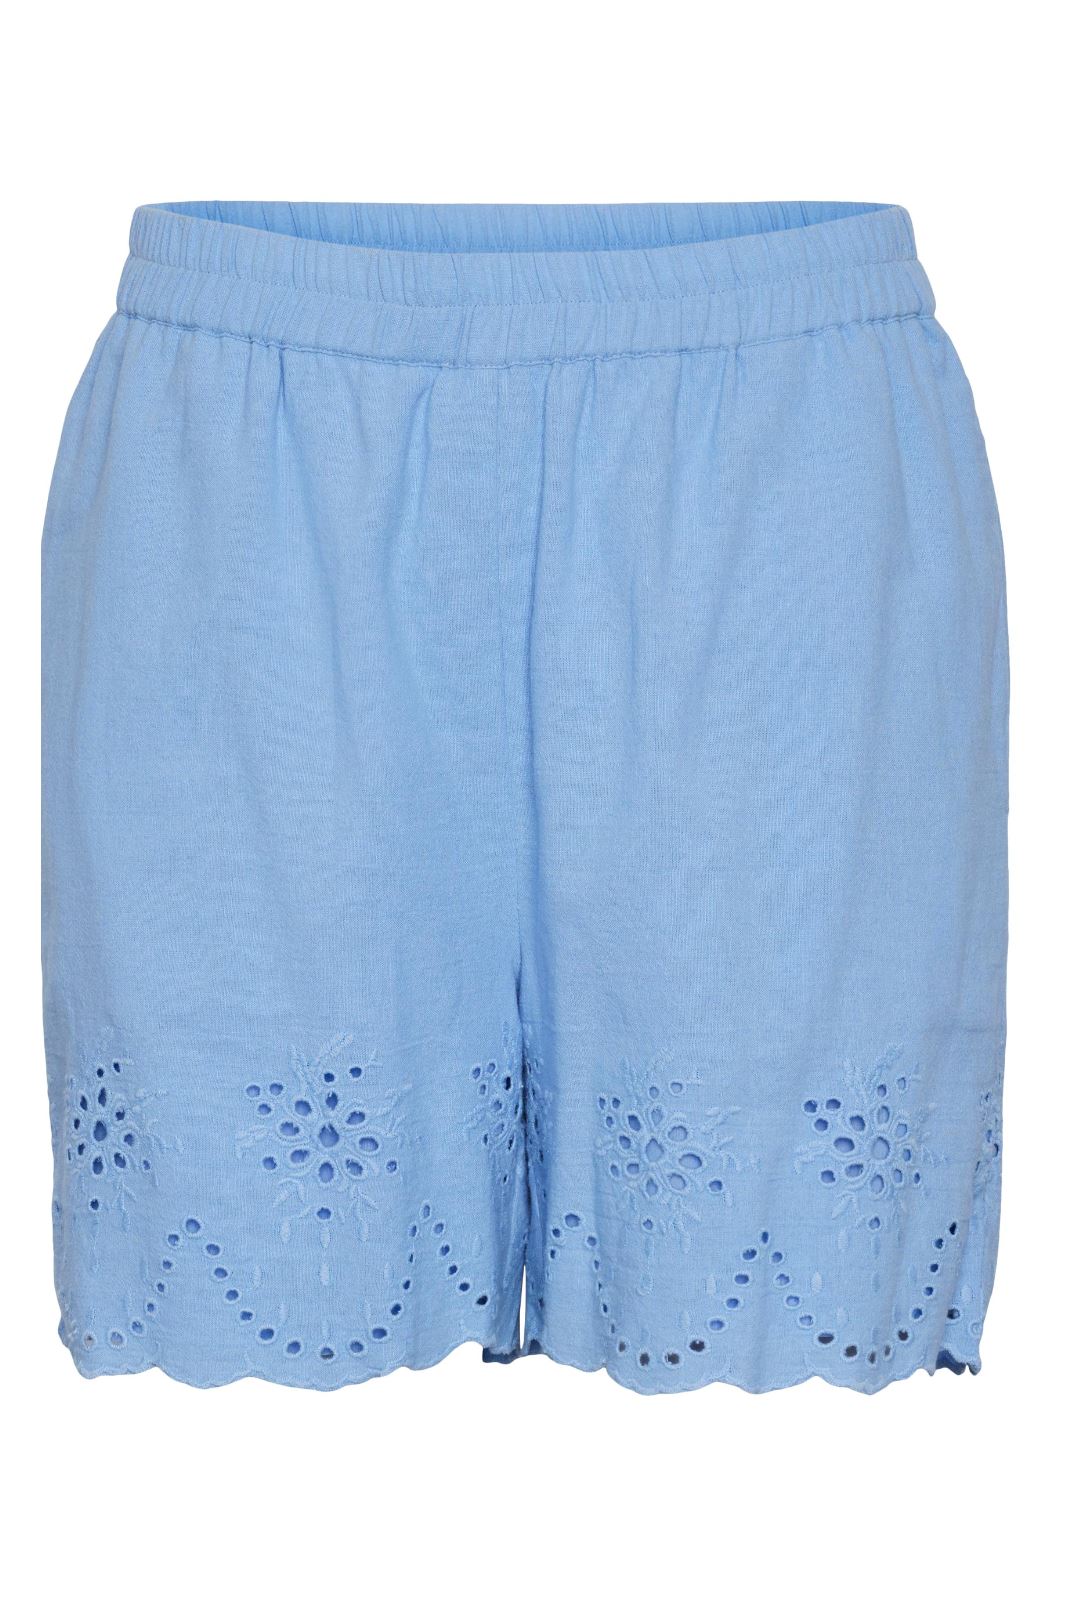 Pieces - Pcalmina Embroidery Shorts - 4486667 Hydrangea Shorts 